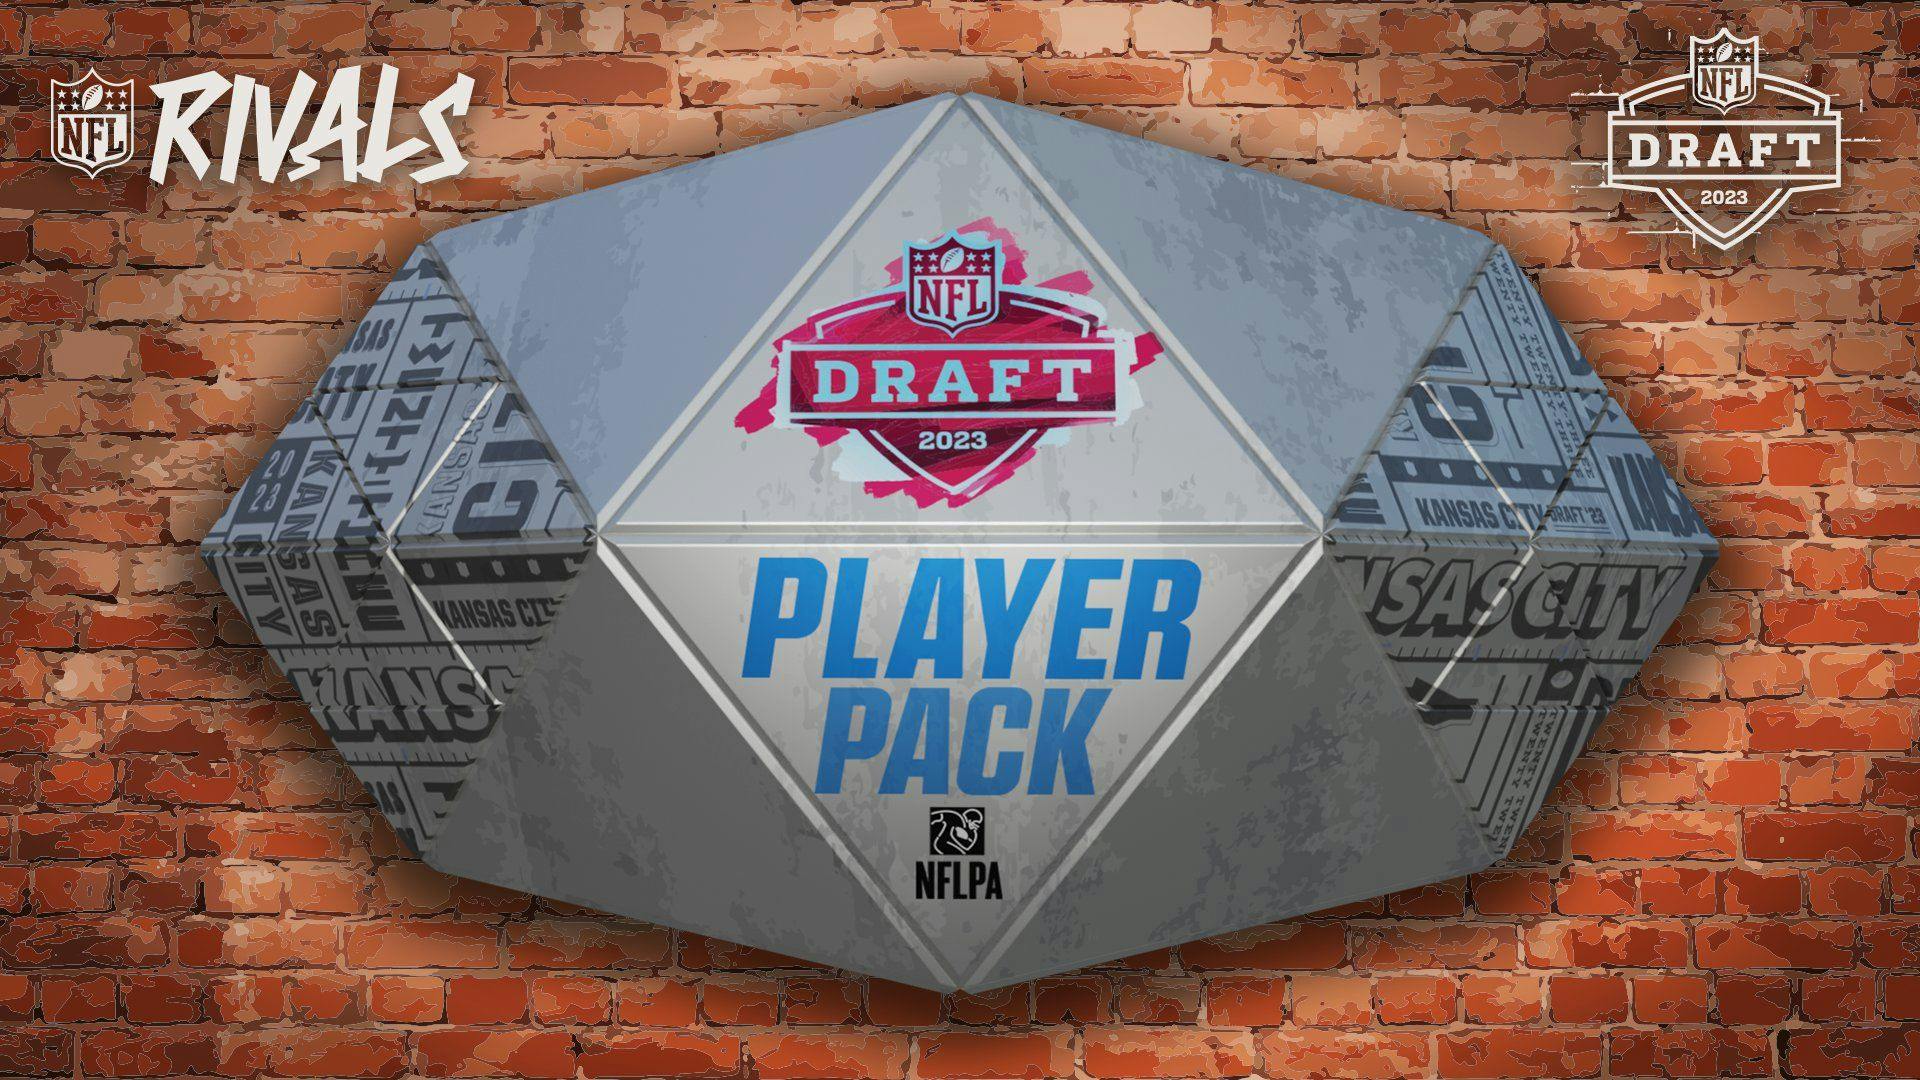 NFL rivals draft player pack.jpg